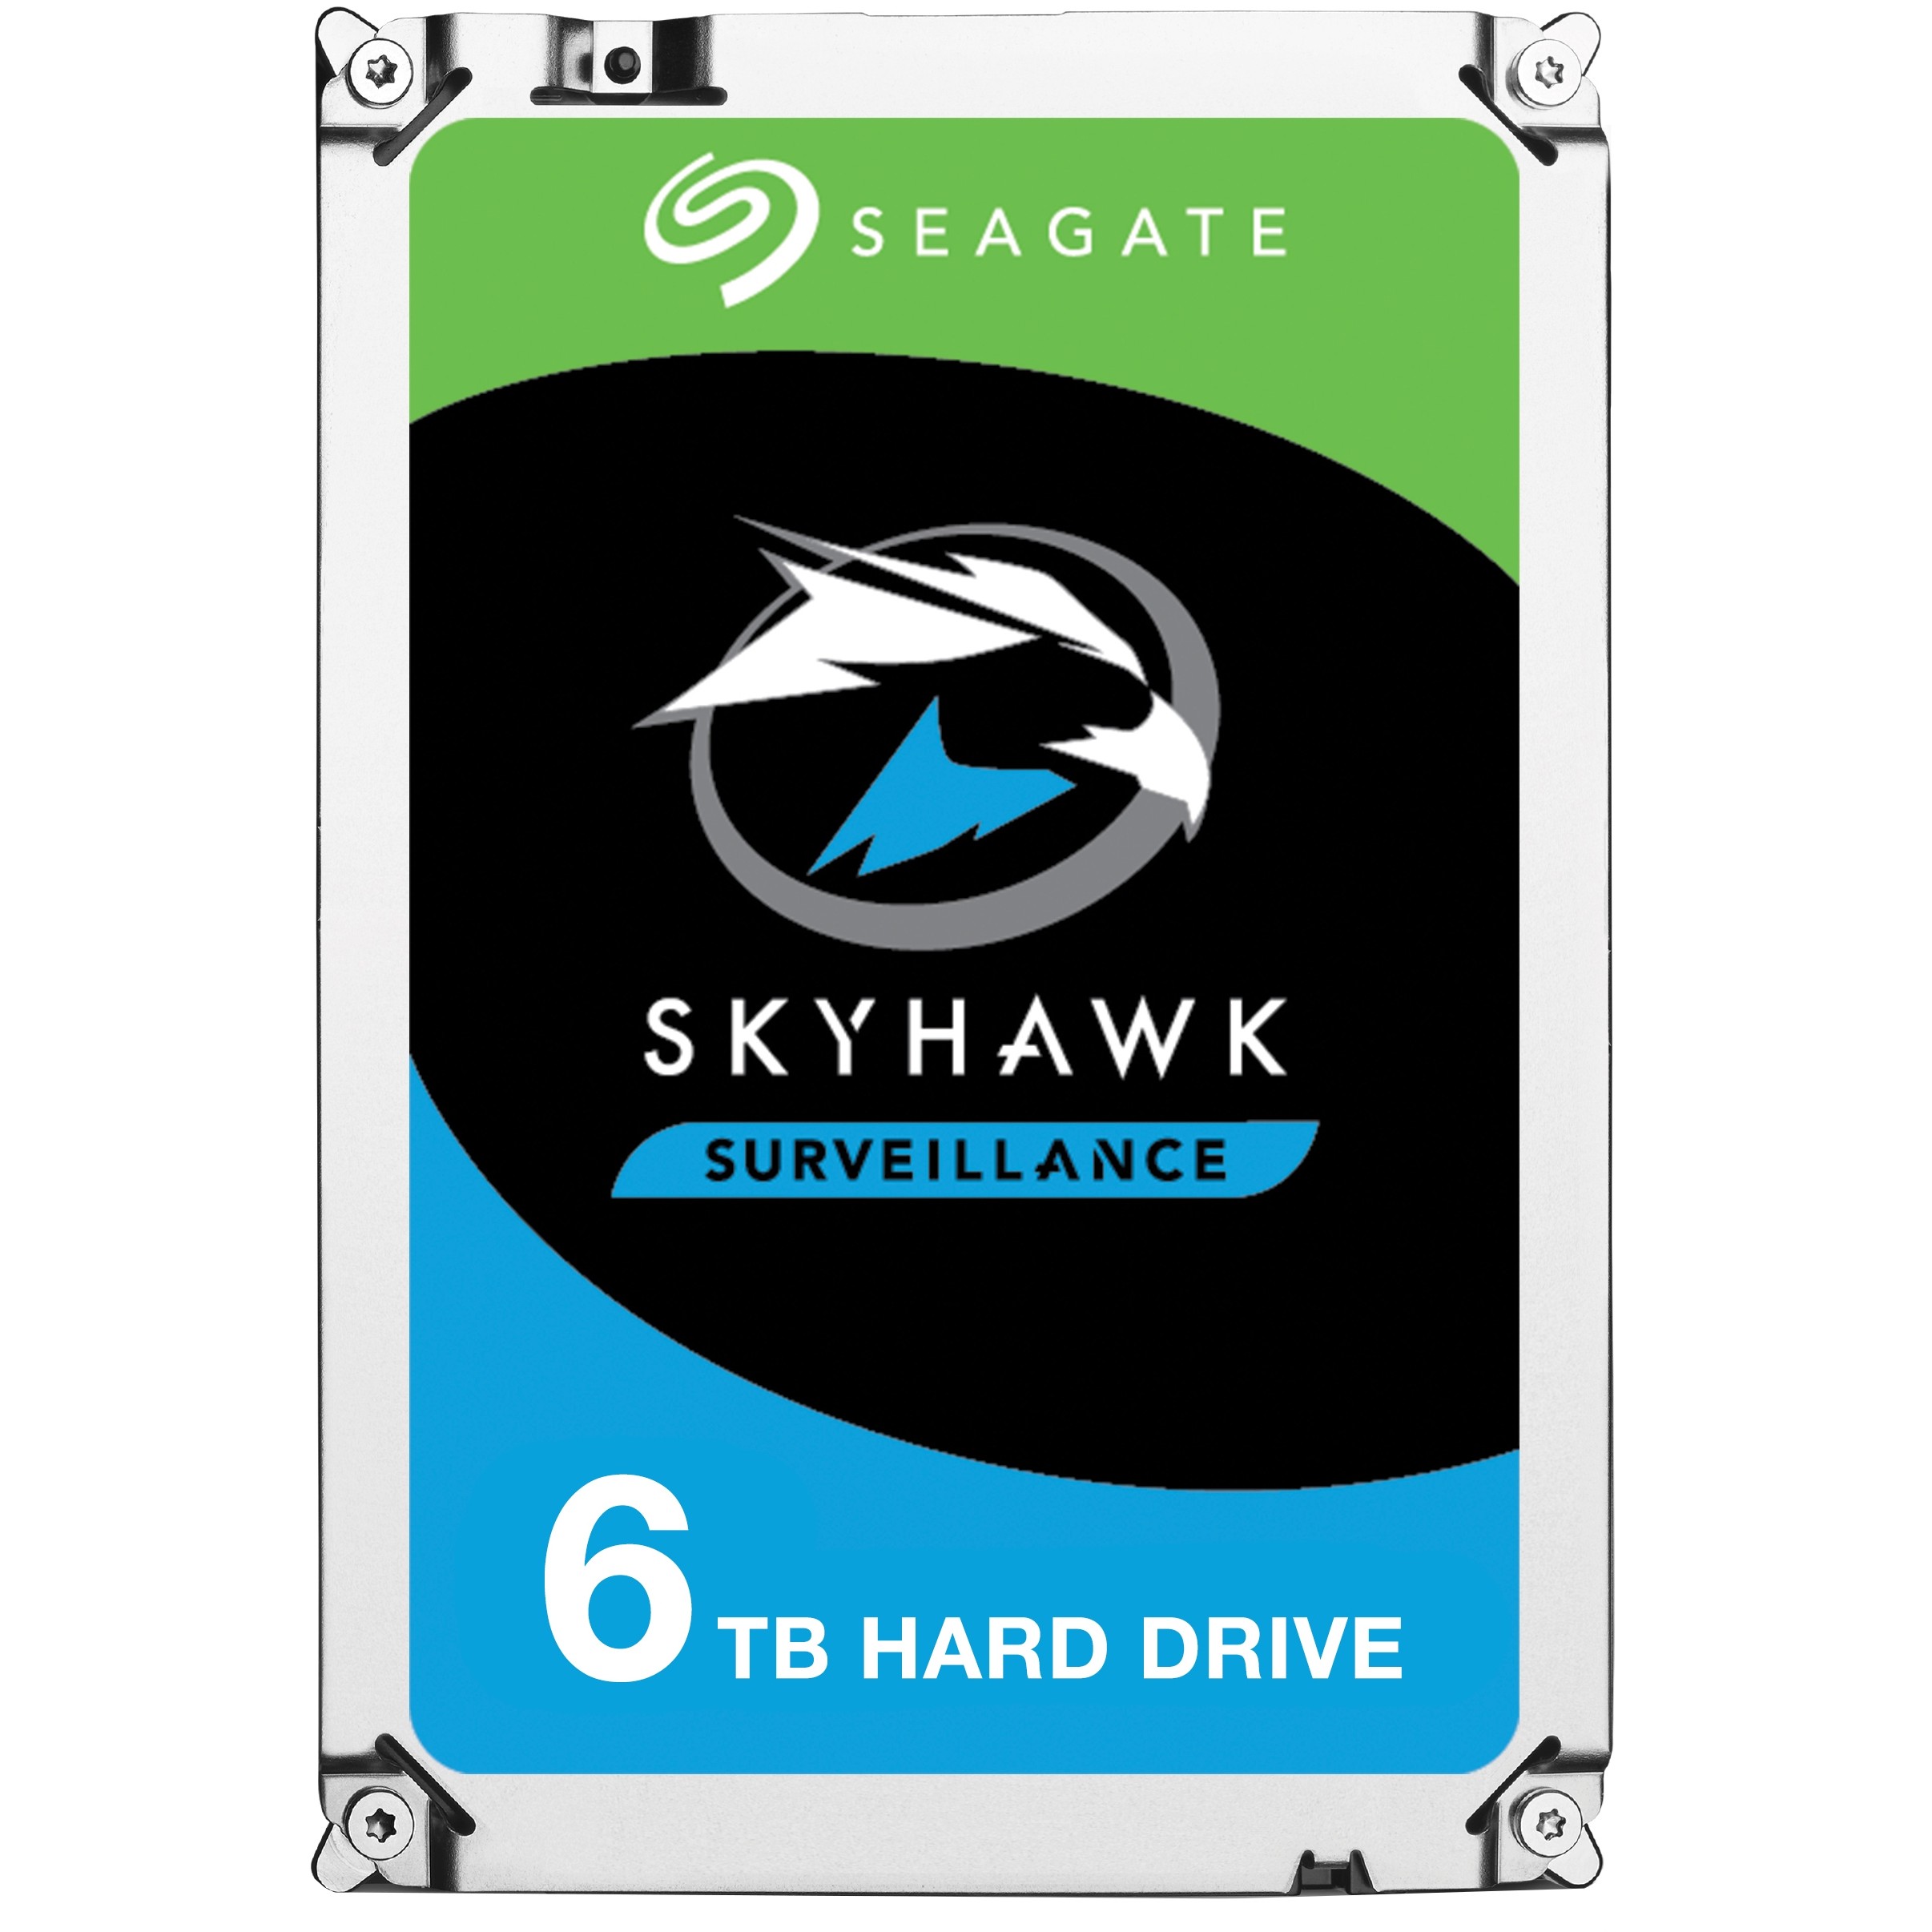 Seagate SkyHawk ST6000VX001 internal hard drive